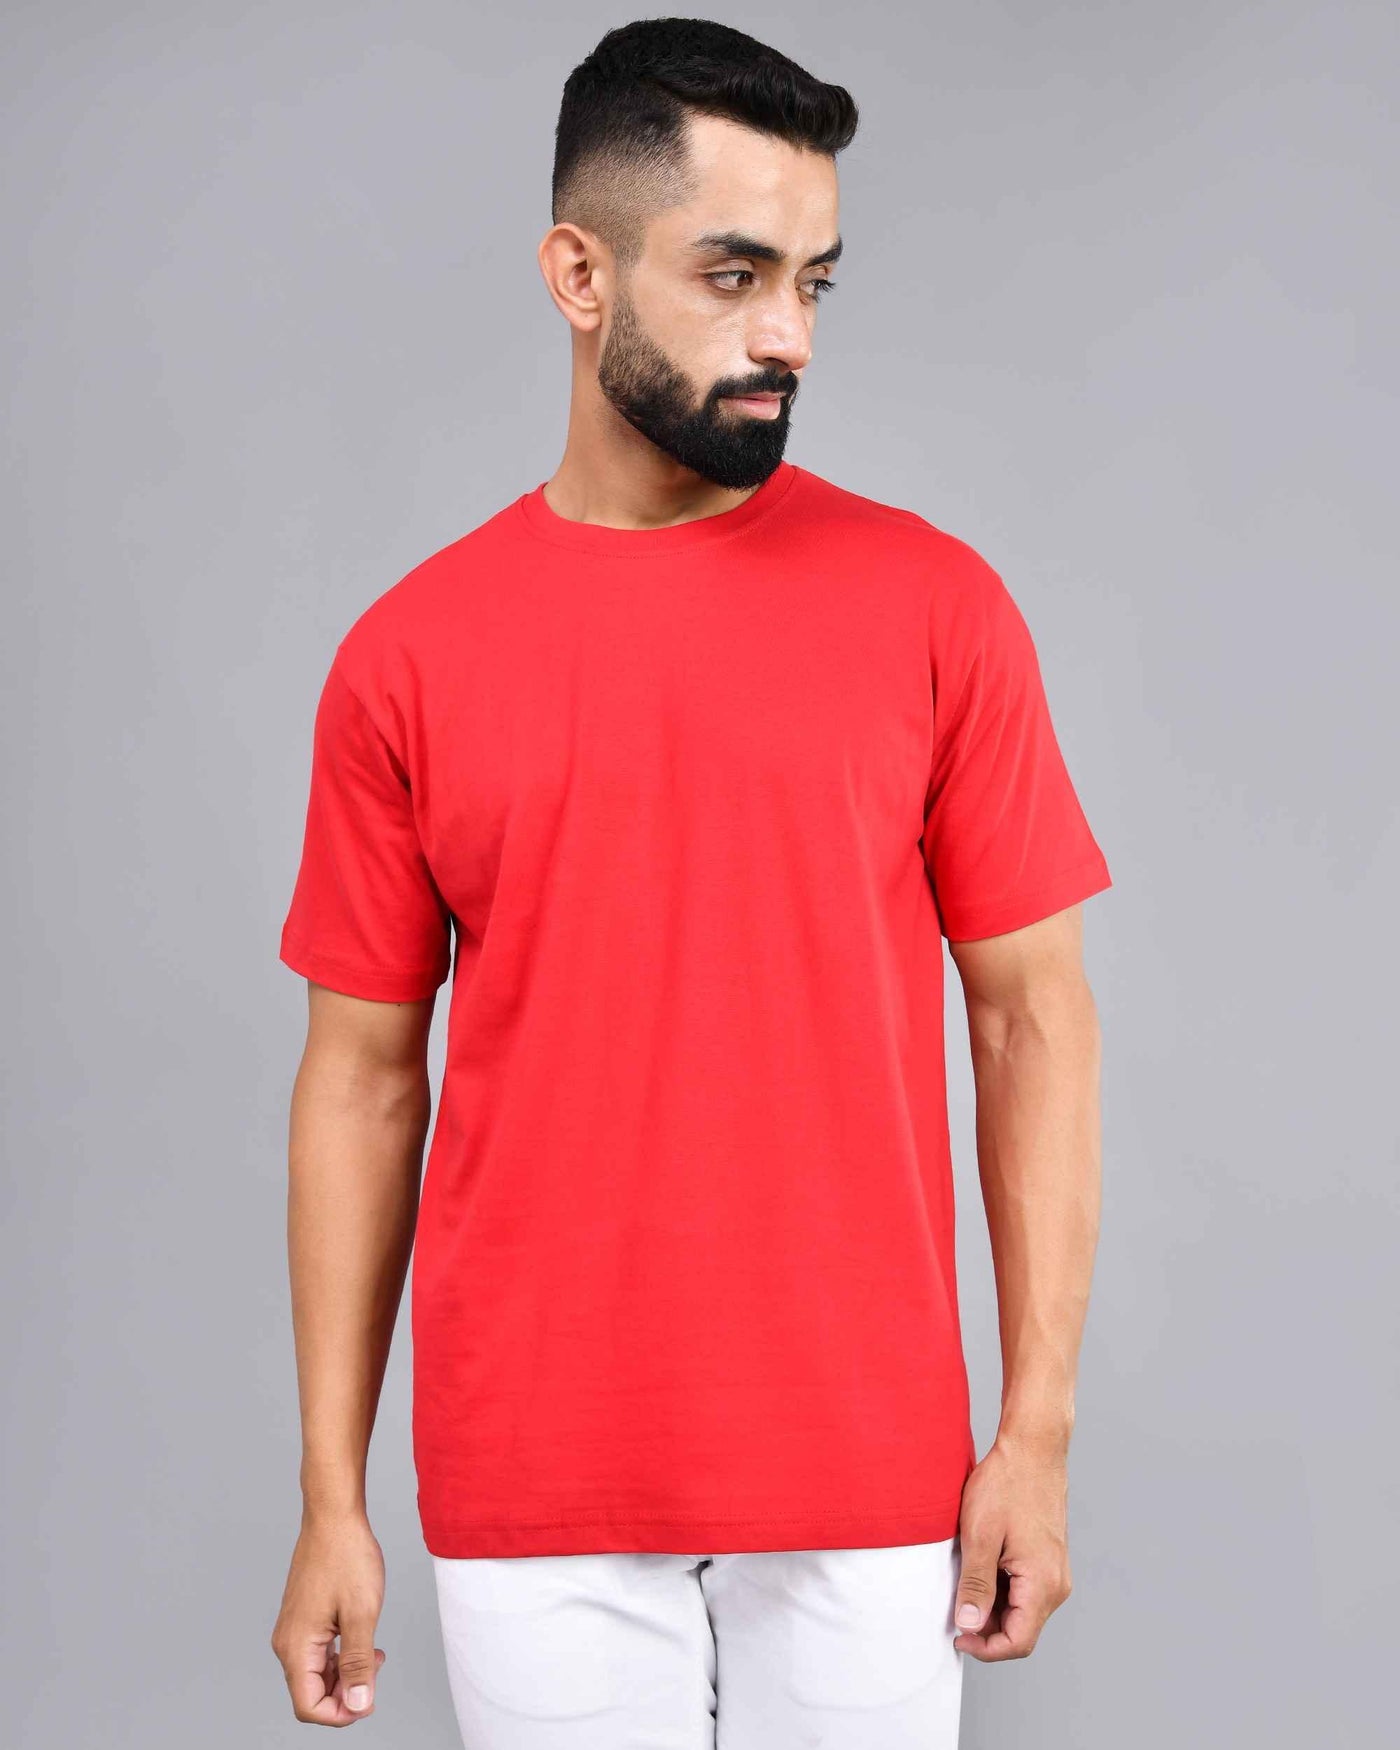 Red Regular Size T-shirt - Wevaste